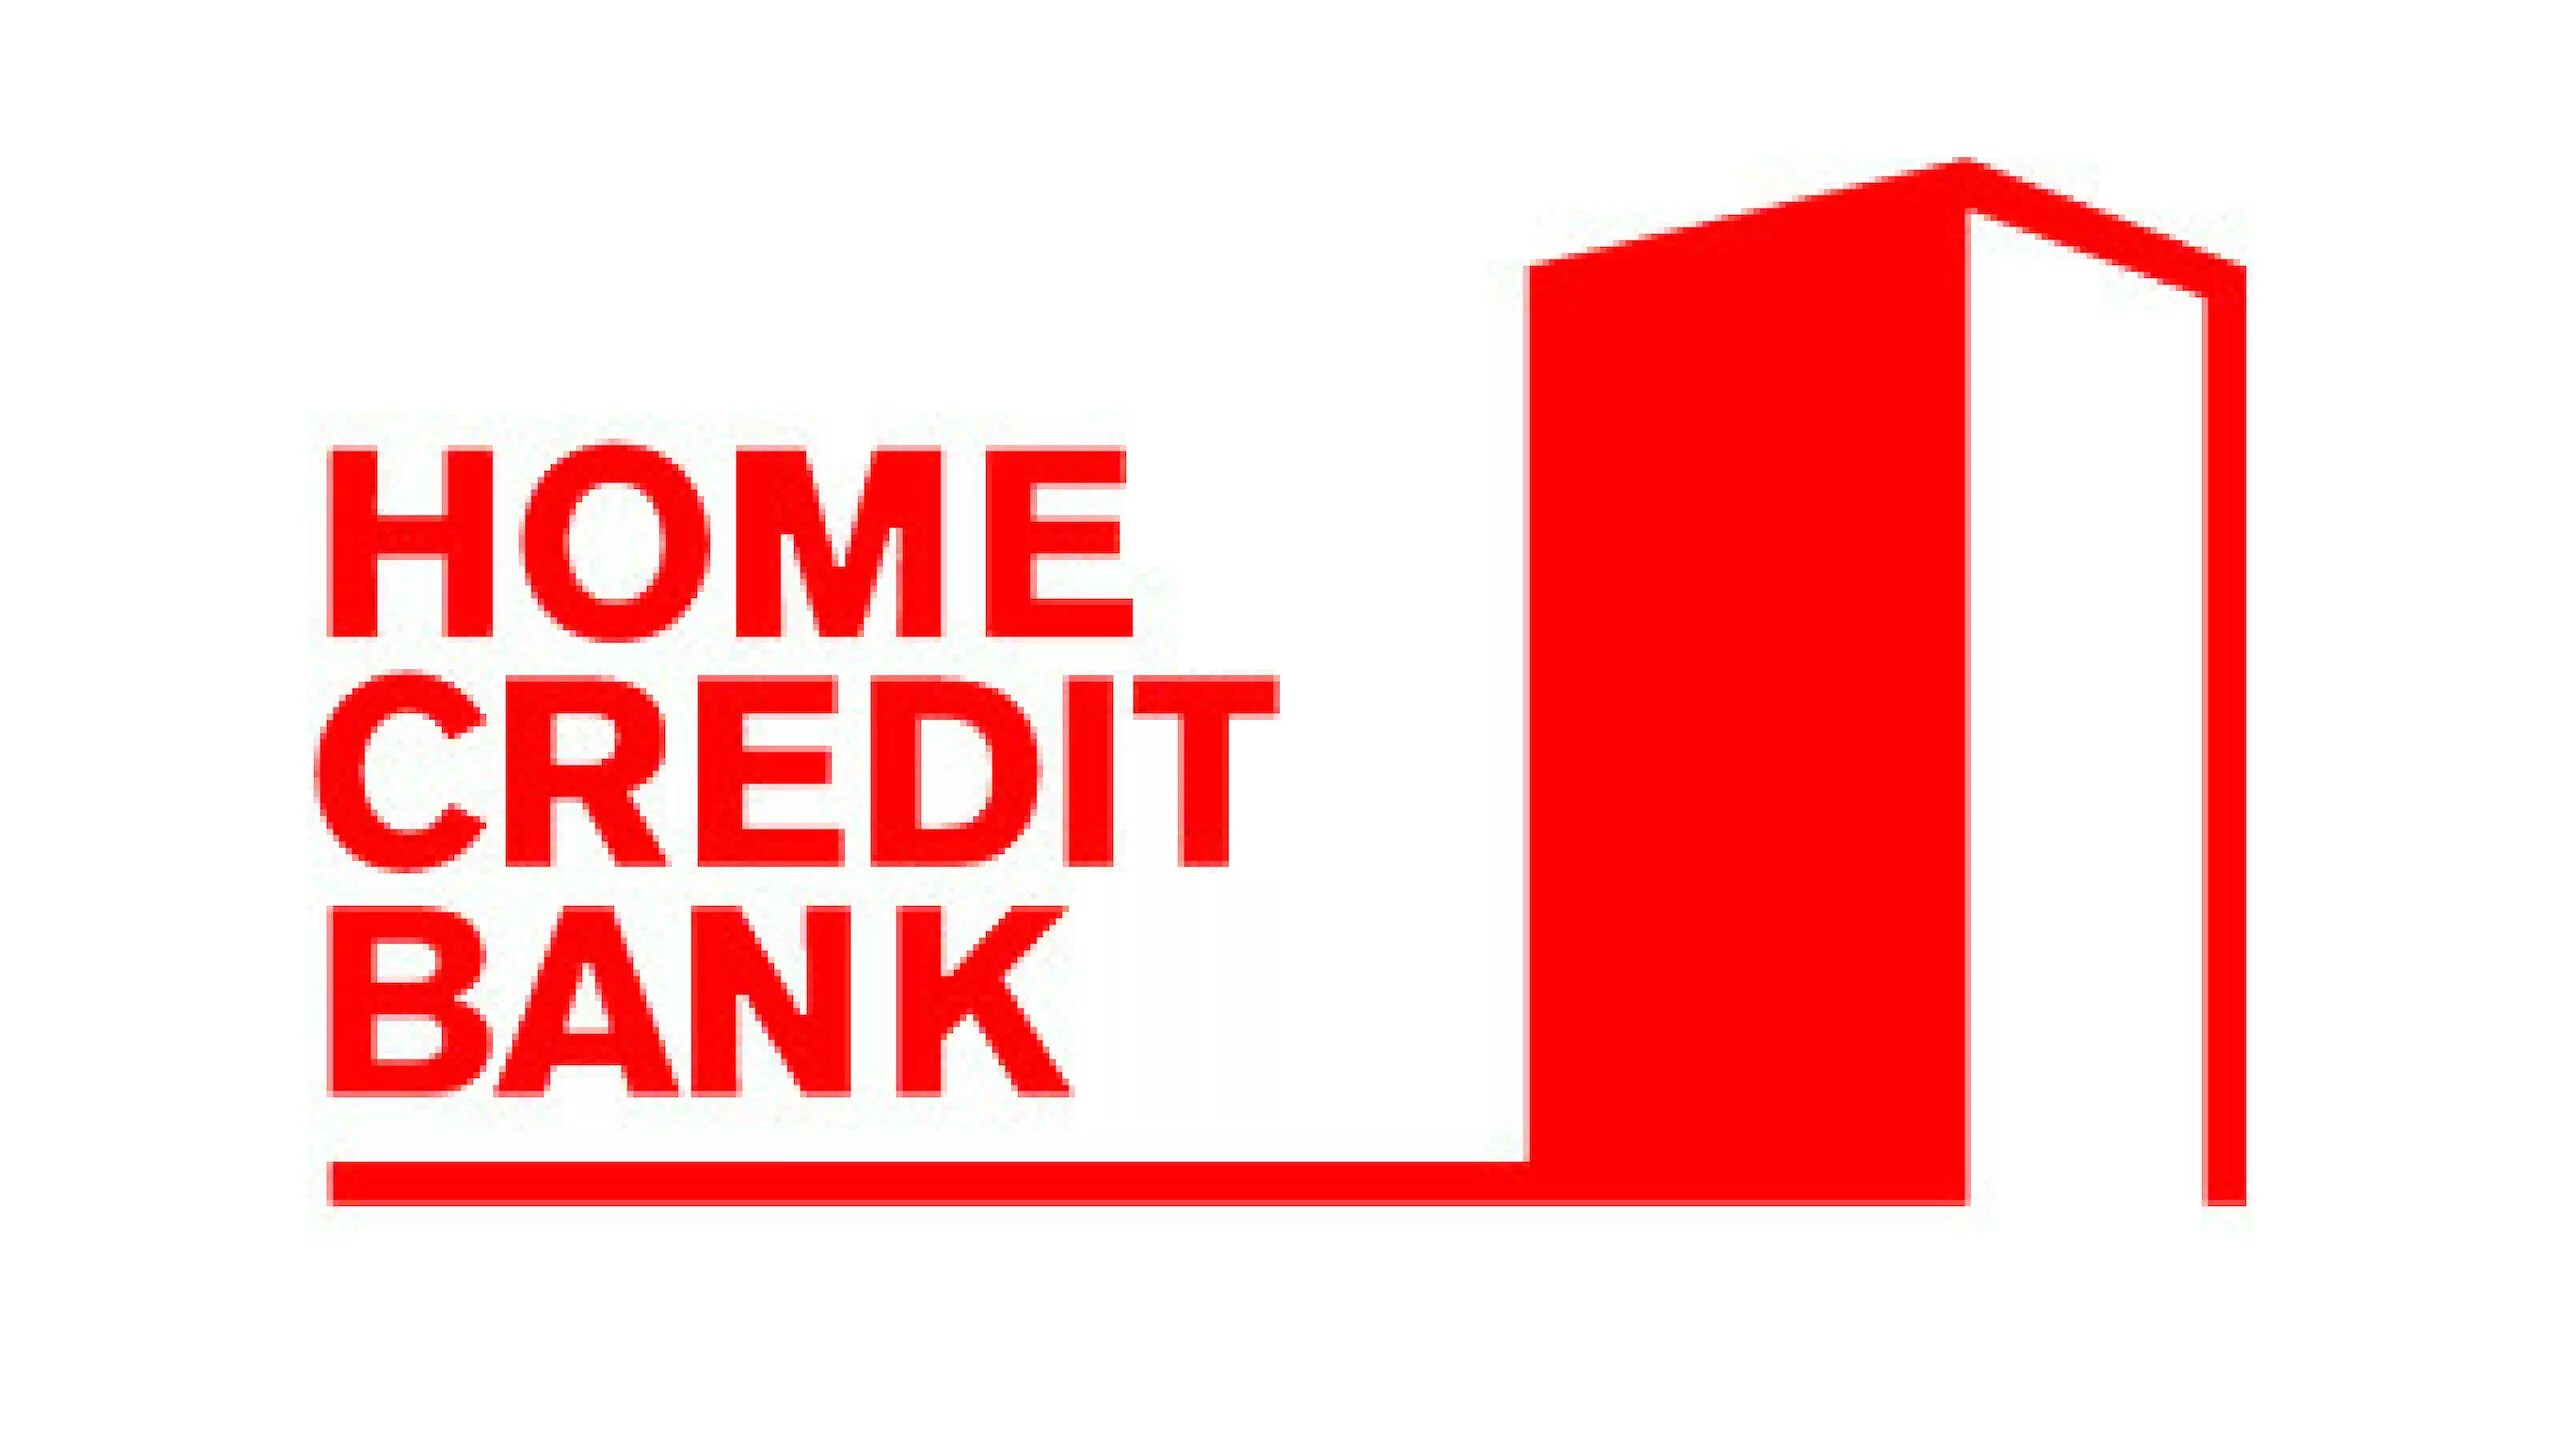 Банк Home credit. Хоум кредит логотип. Логотип Home credit банка. Home credit Bank логотип без фона. Home credit bank logo